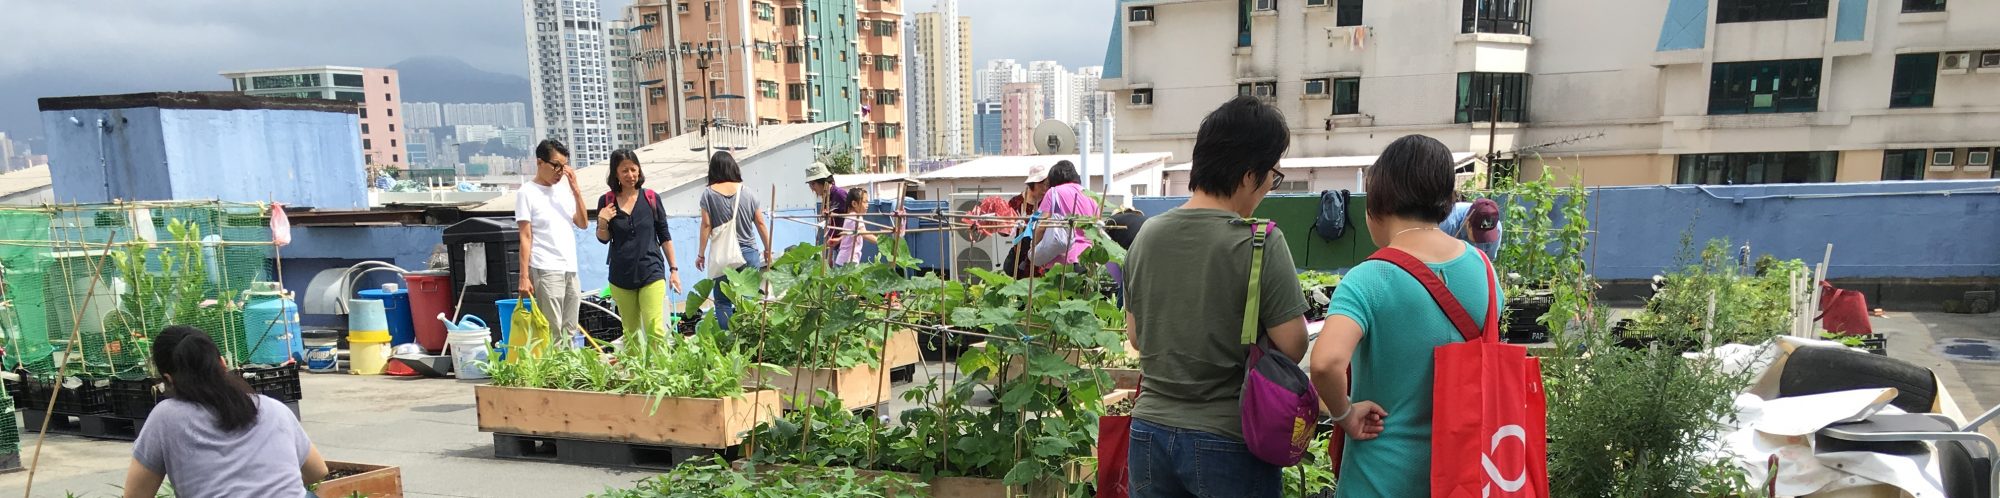 Urban Rooftop Farming